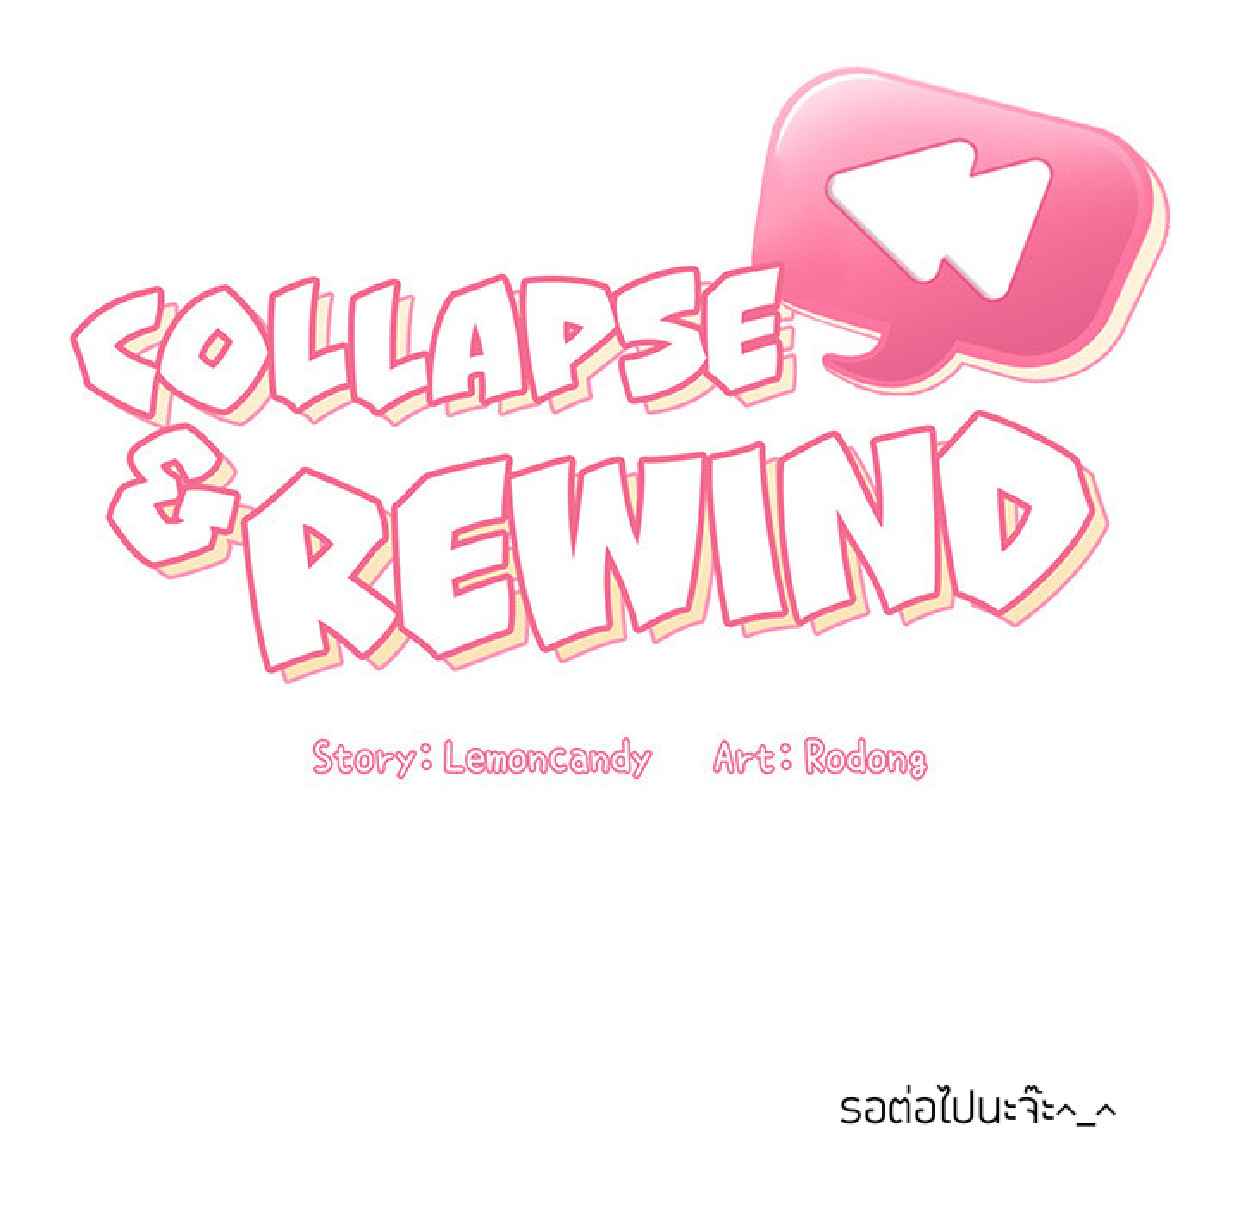 Collapse &rewind1 (169)